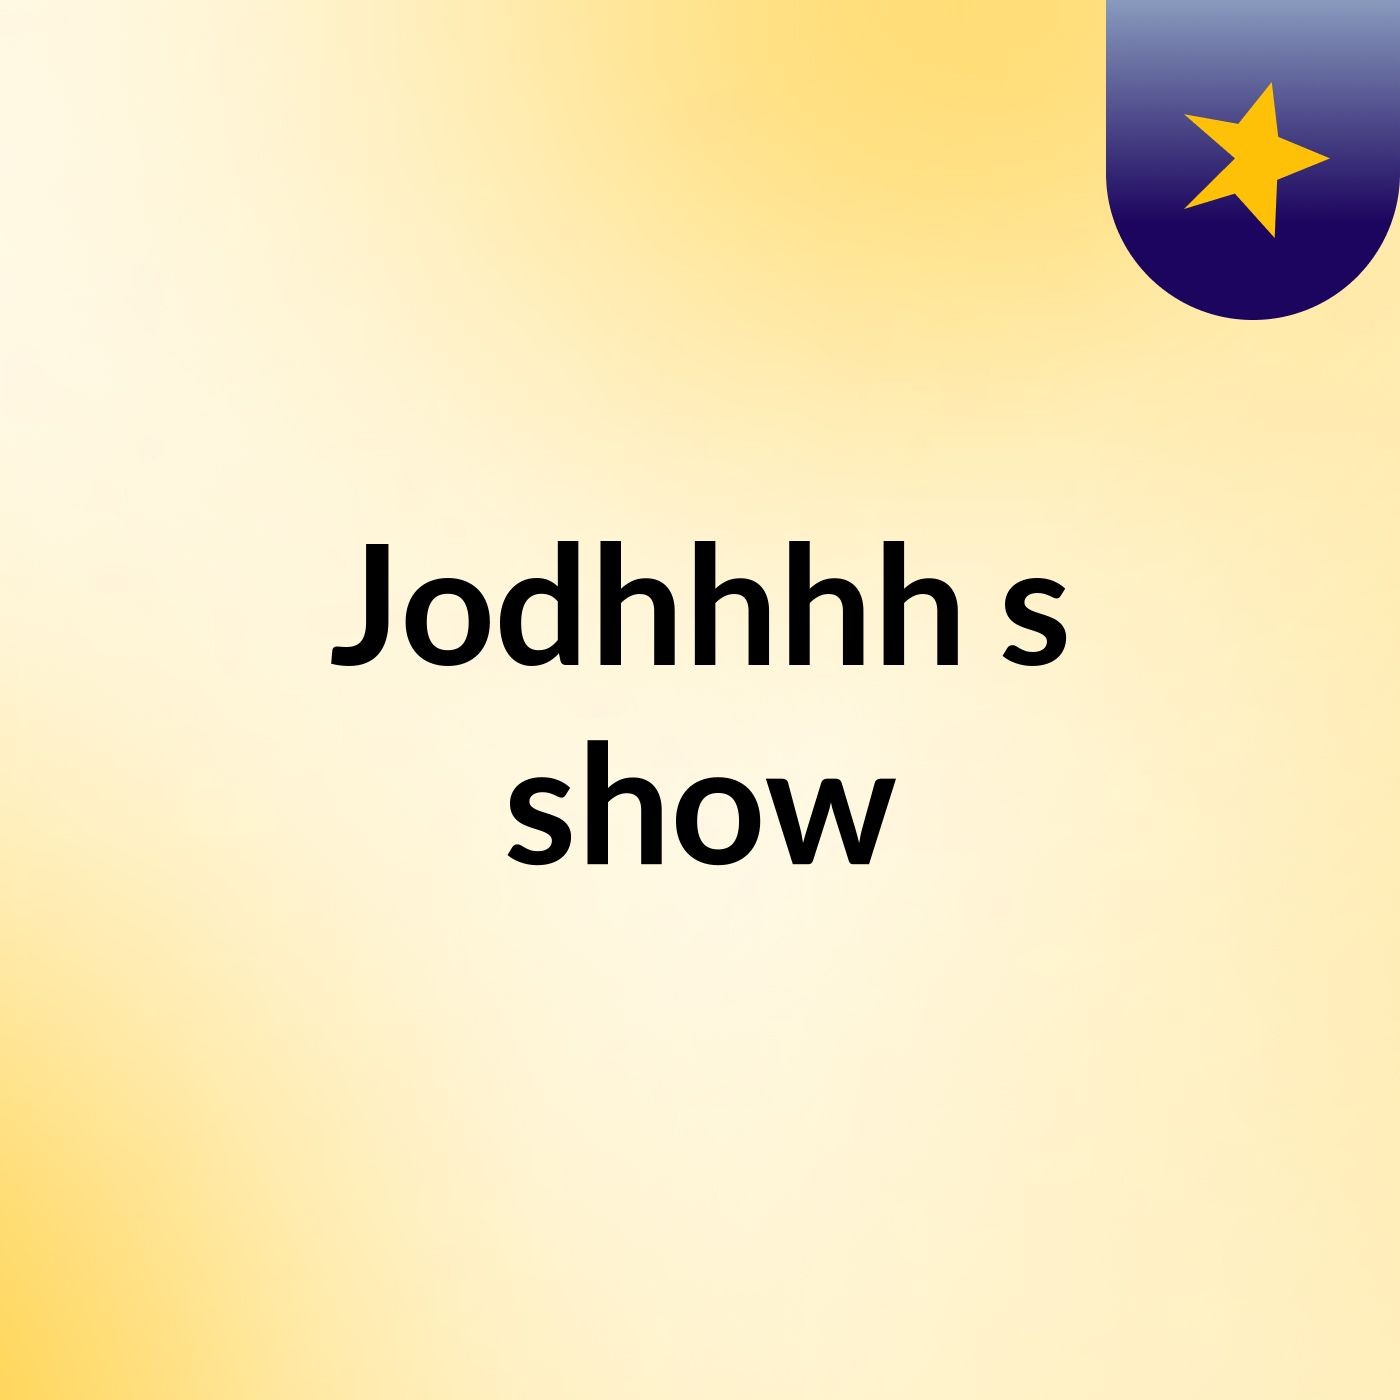 Jodhhhh's show